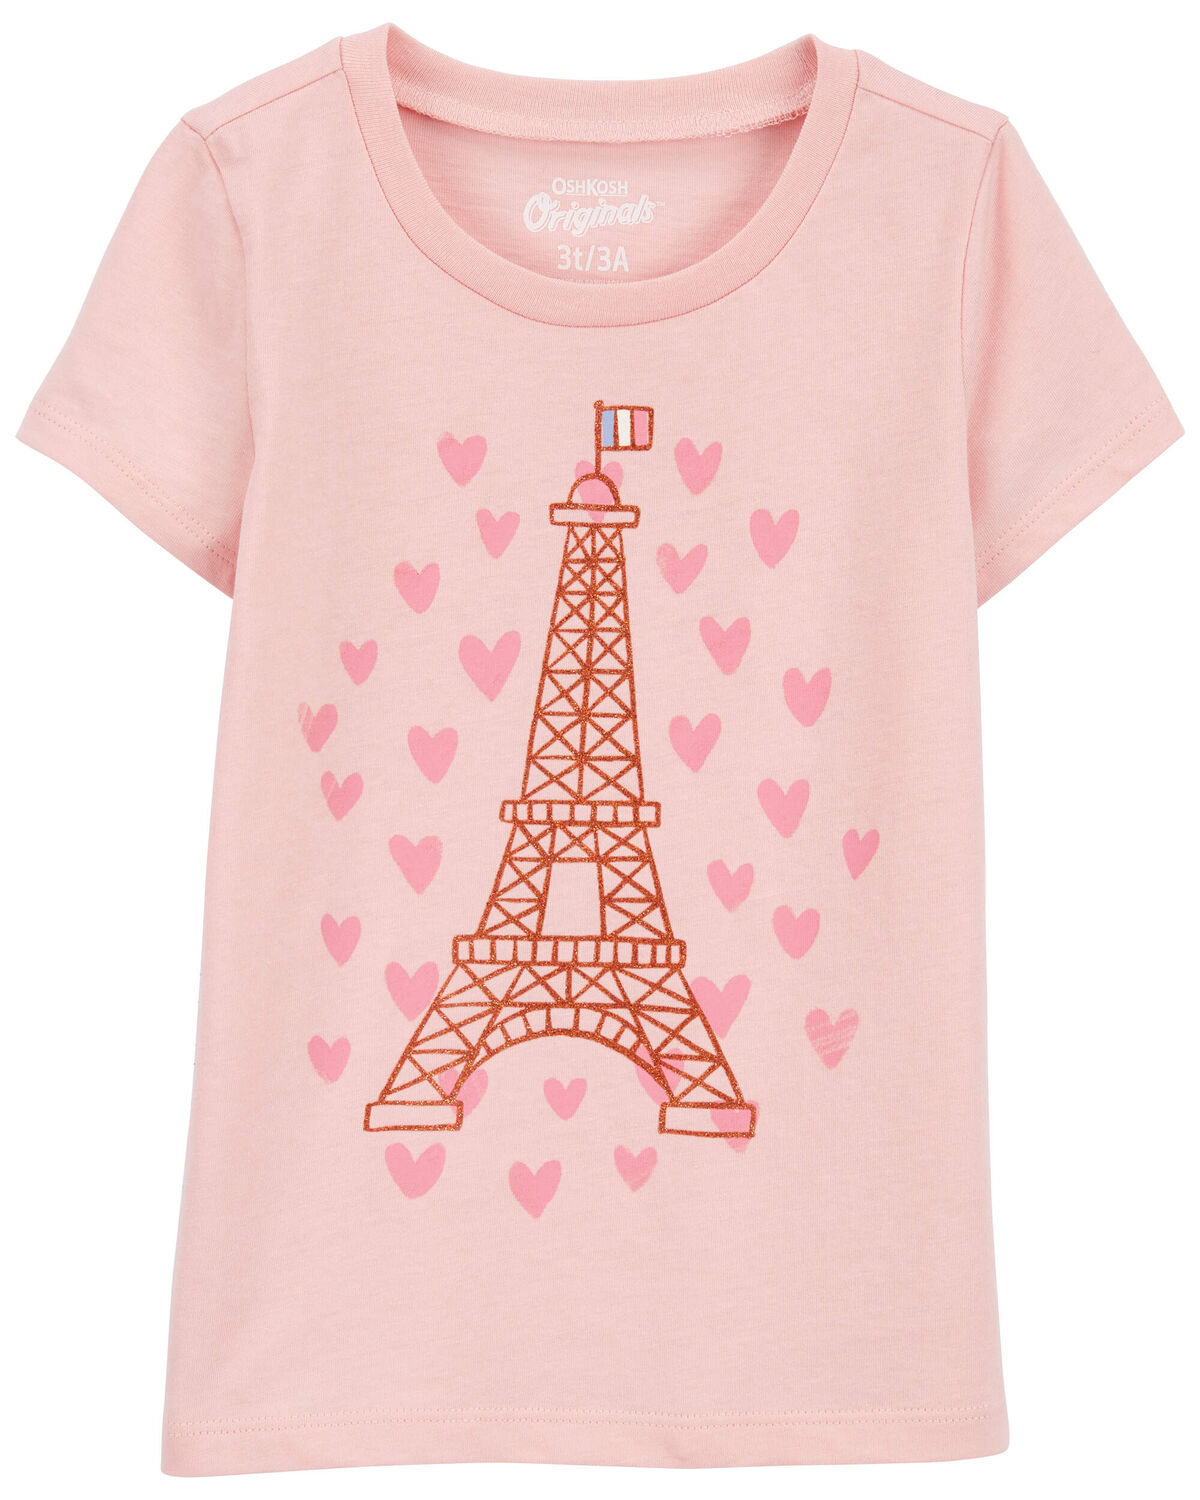 Toddler Love Paris Graphic Tee